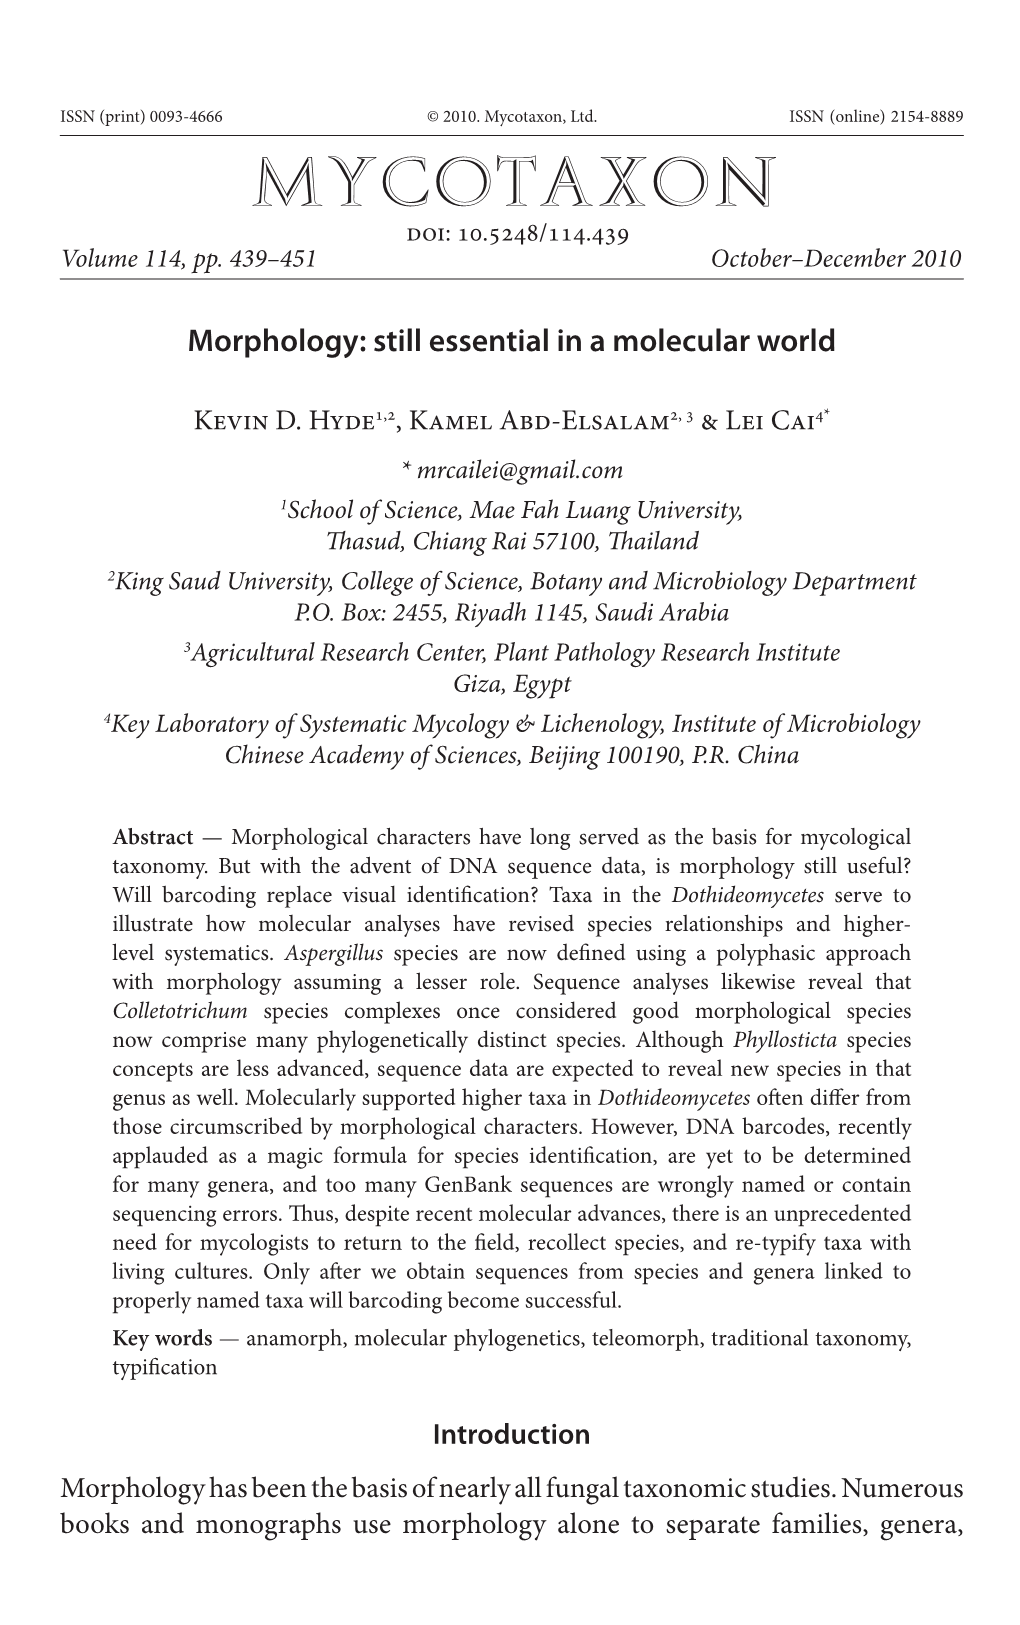 Morphology: Still Essential in a Molecular World